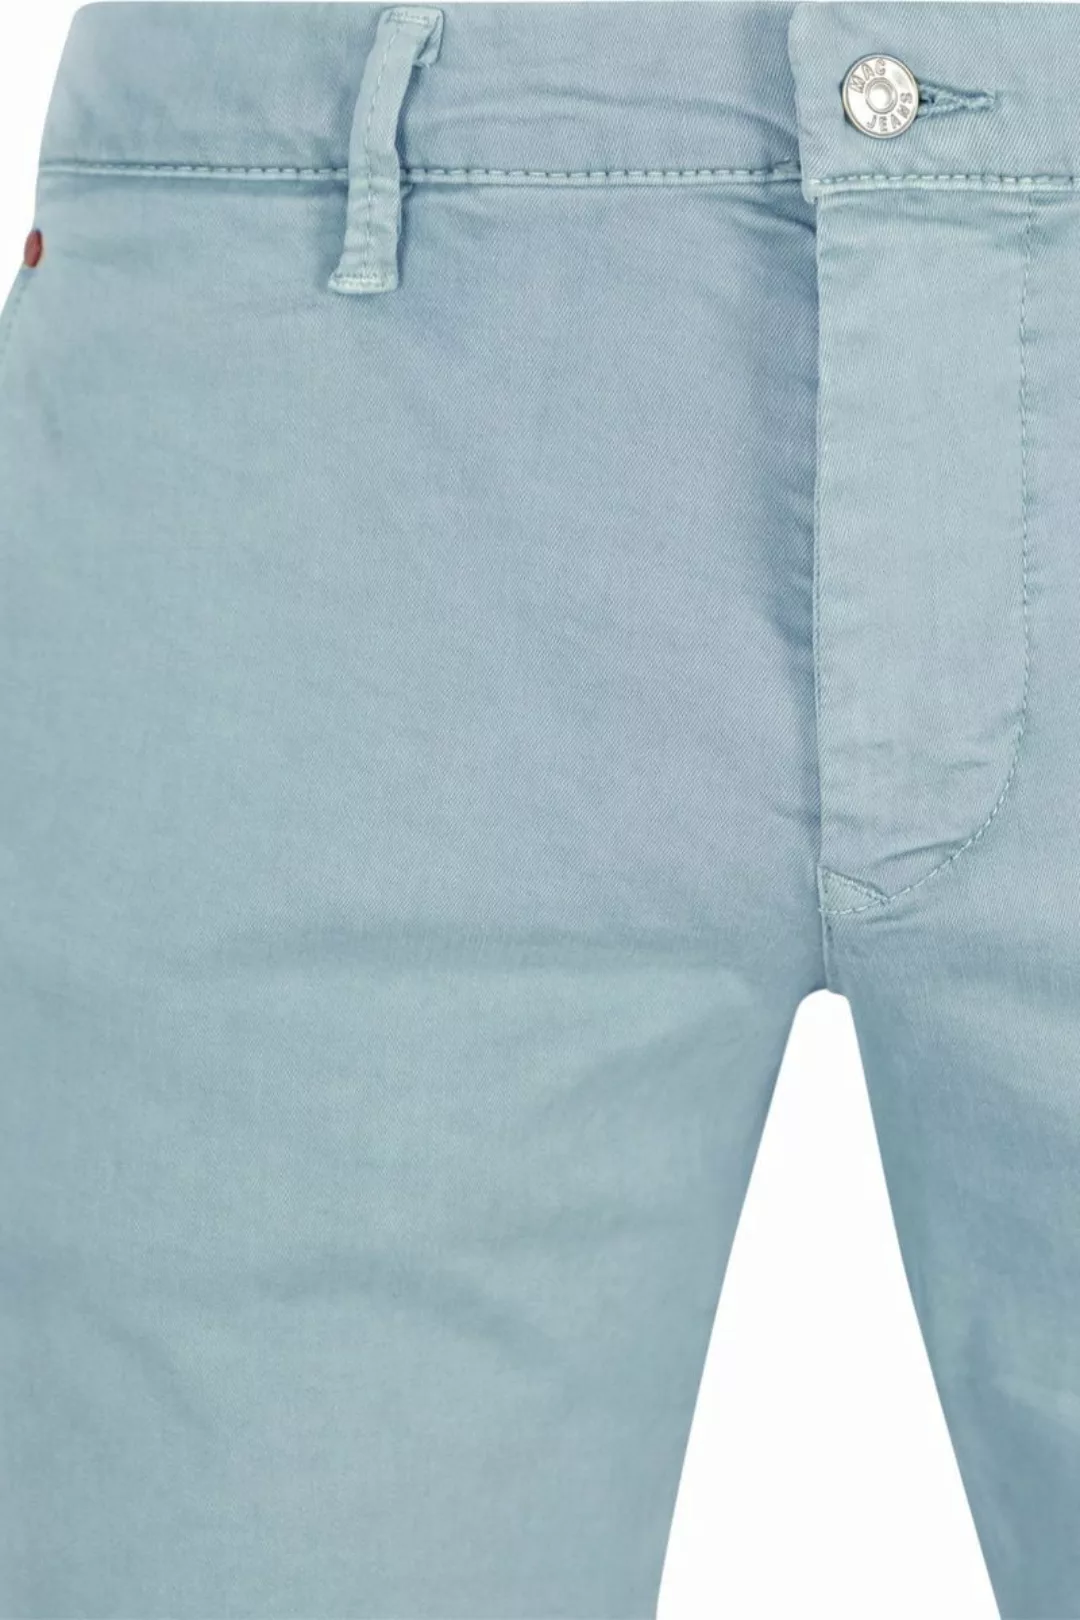 Mac Jeans Driver Pants Hellblau - Größe W 38 - L 32 günstig online kaufen